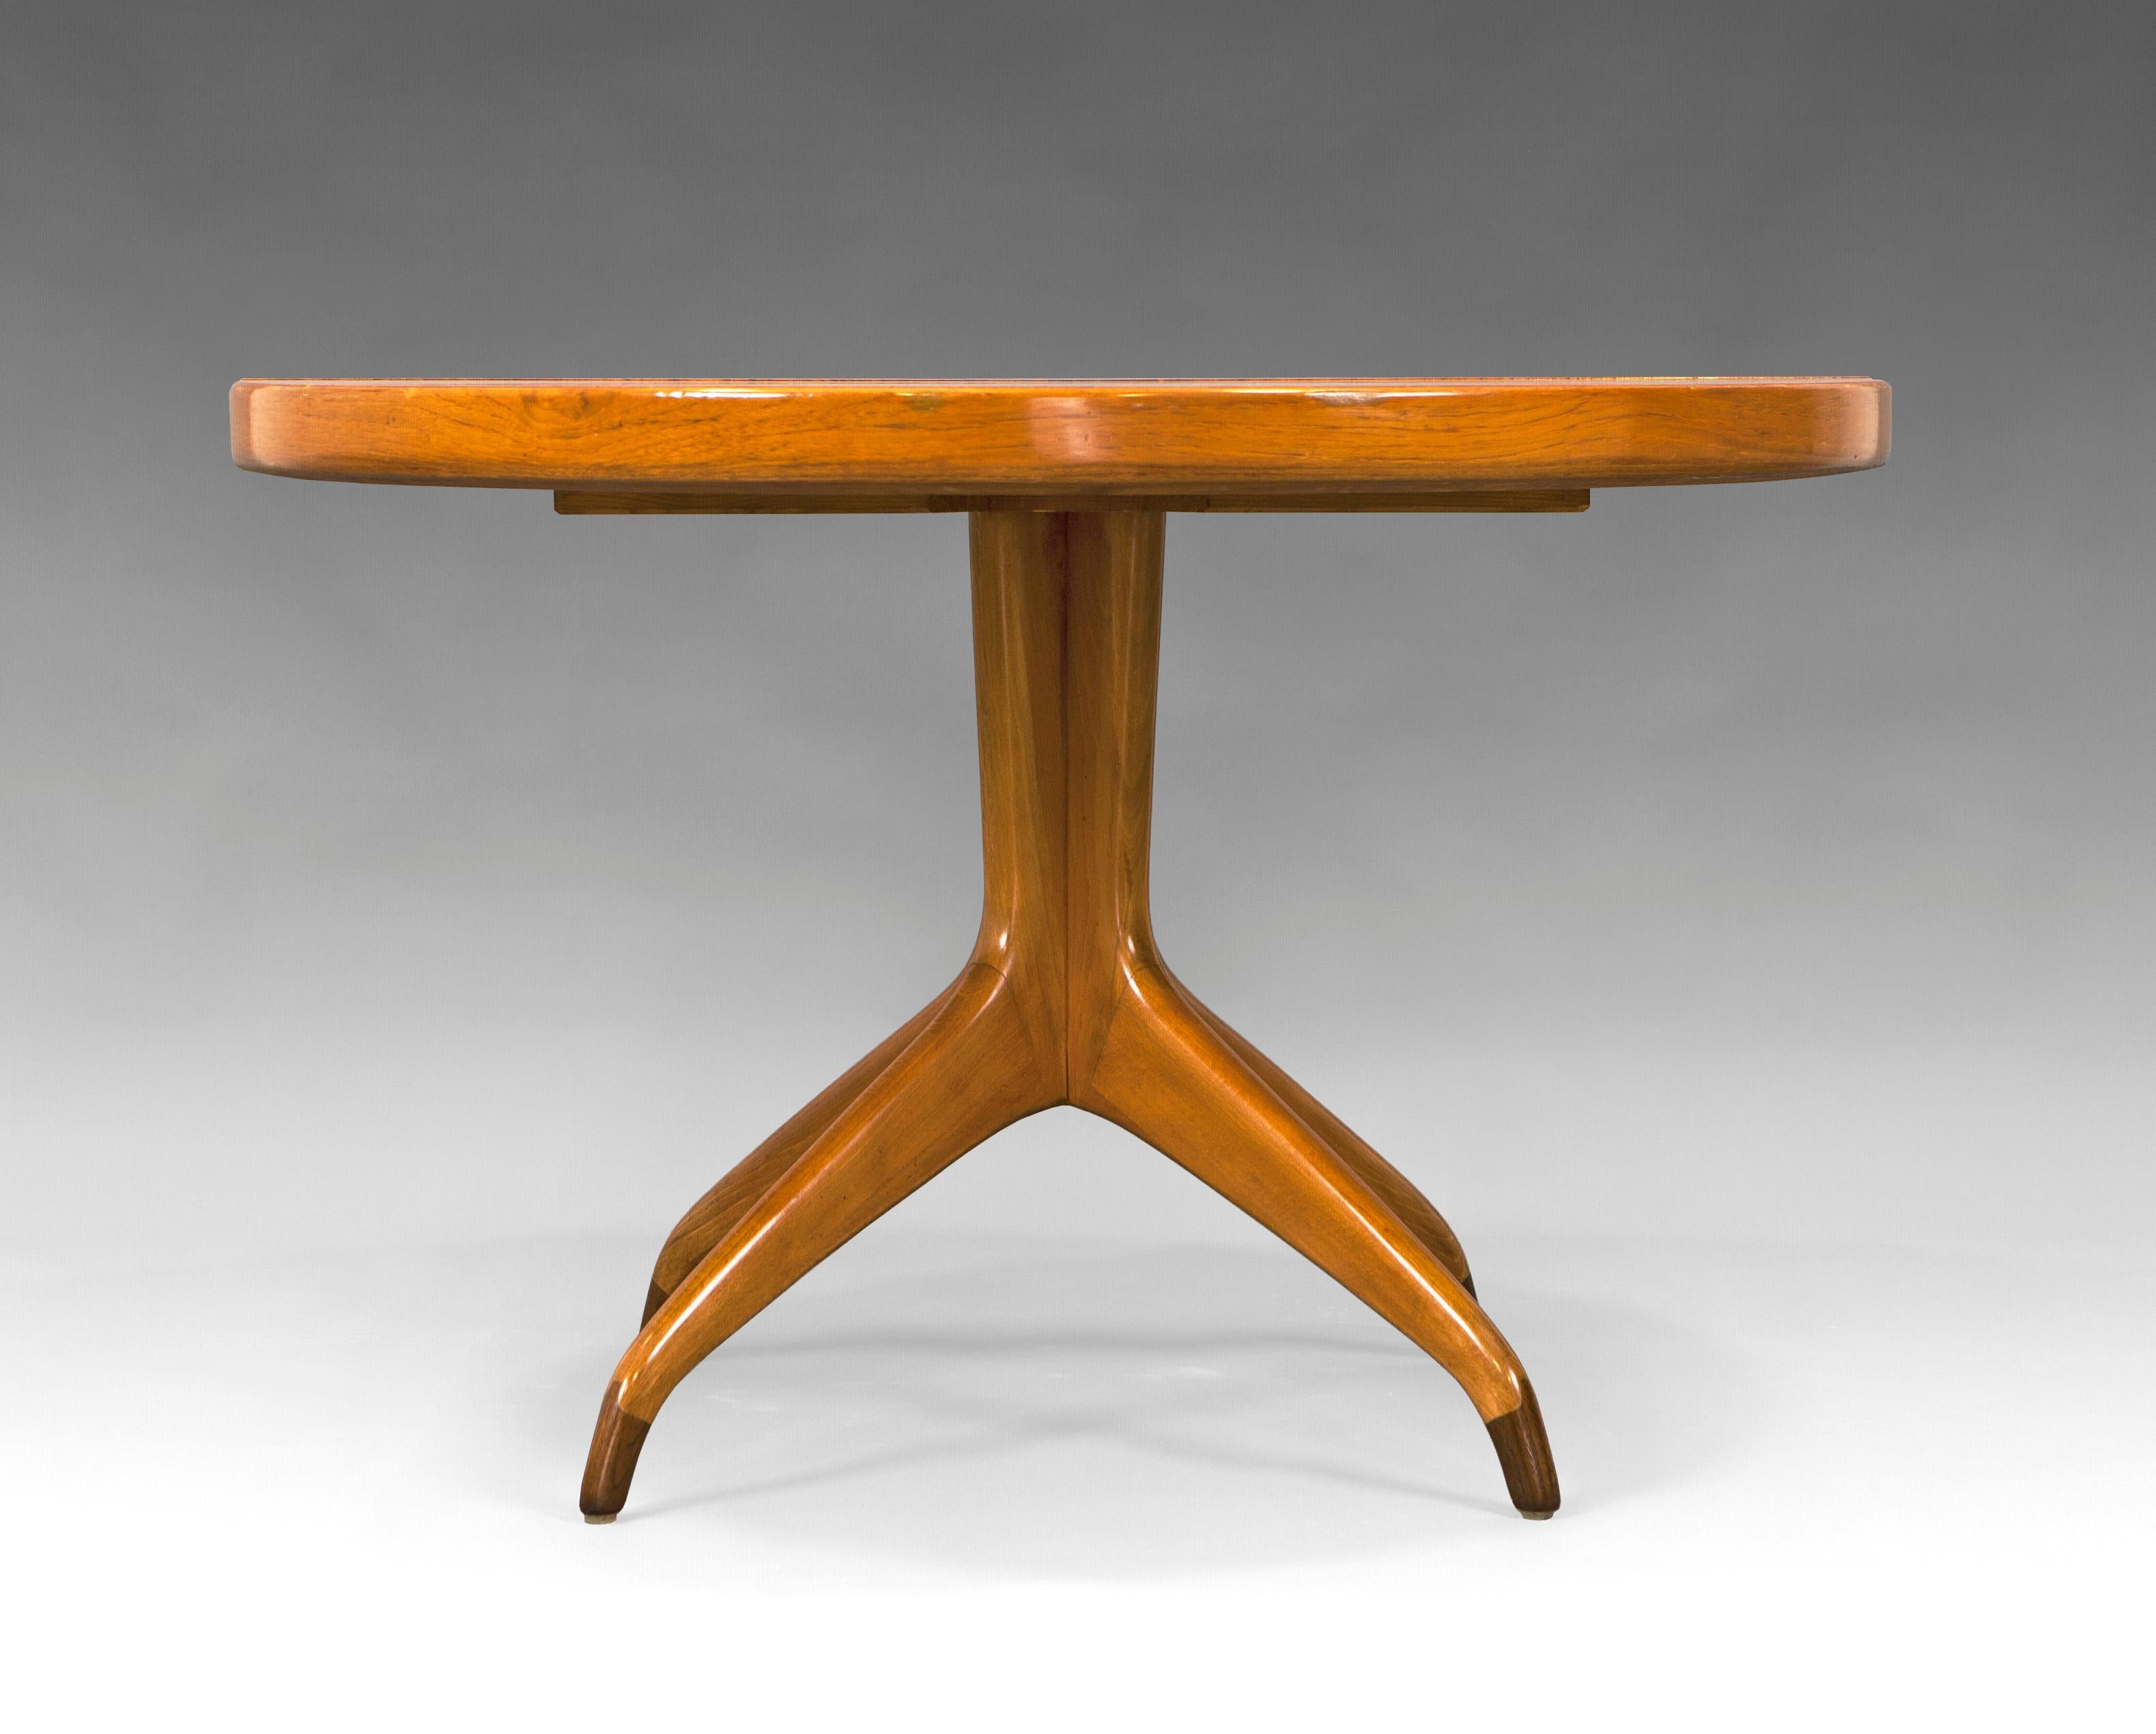 Dining table designed by David Rosen for Nordiska Kompaniet. Sweden, 1950s. Teak wood with rosewood details.